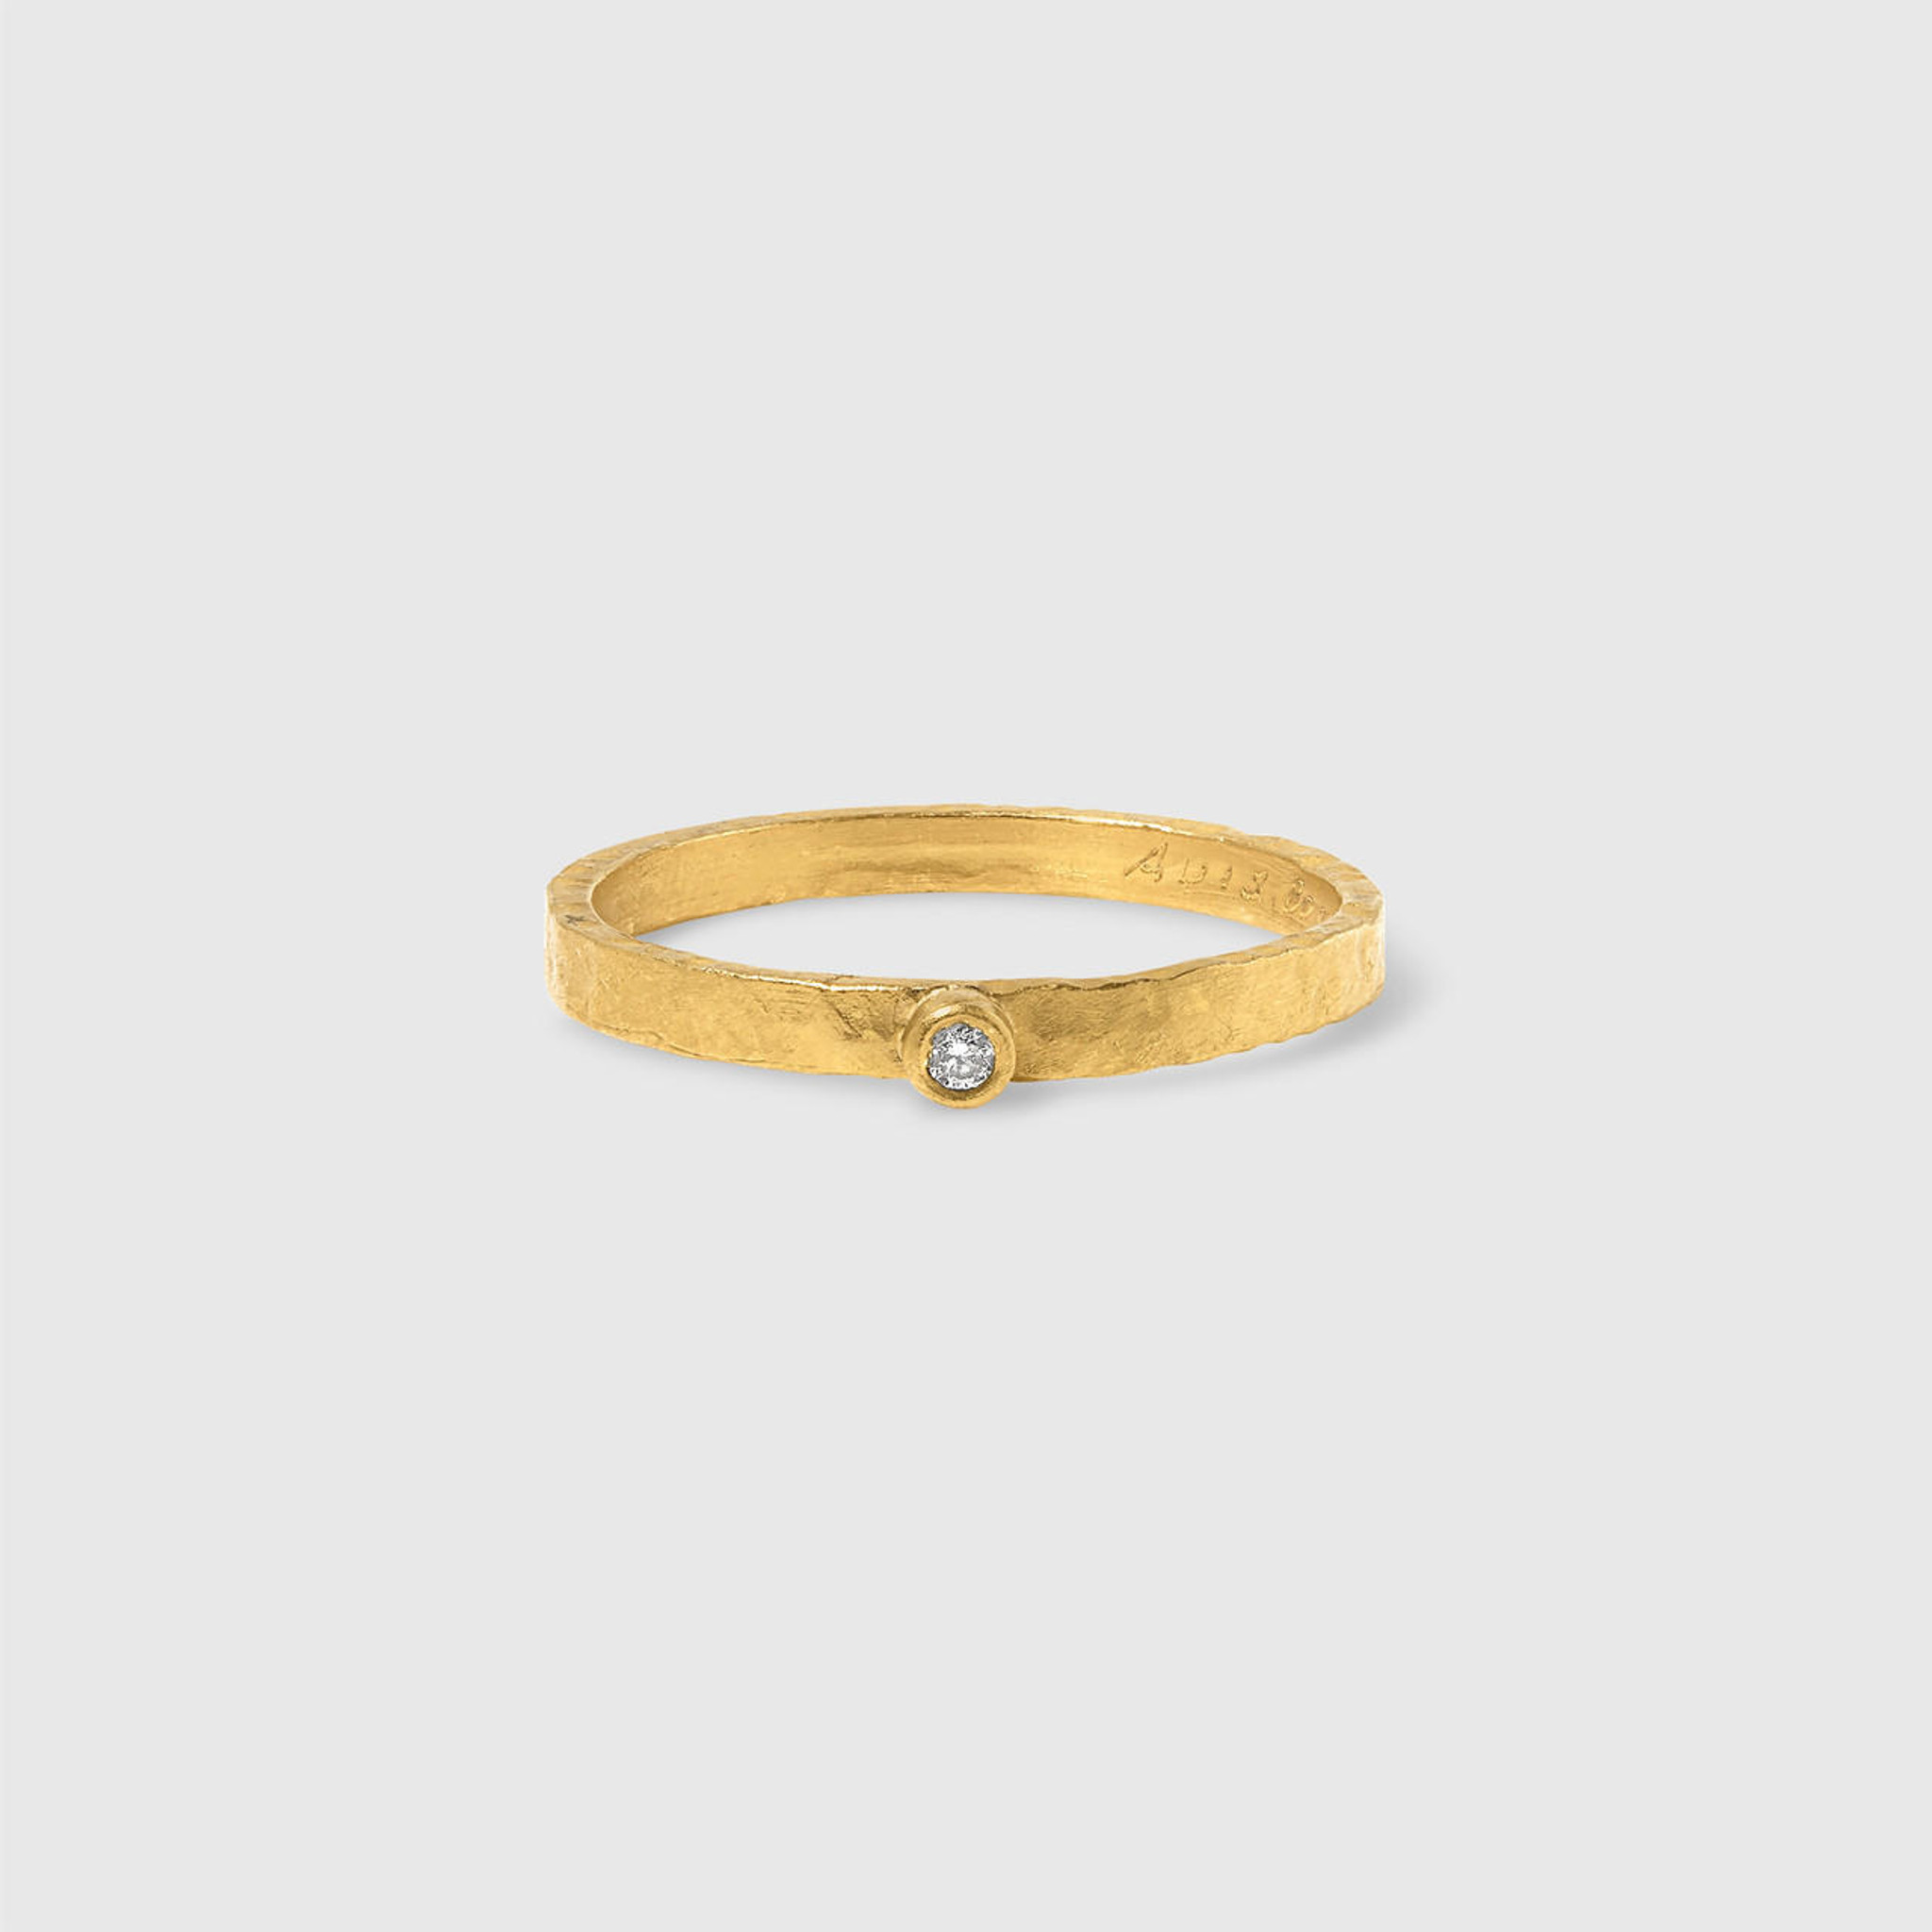 Buy Heirloom Korean Ring in 24K Solid Gold 돌반지 Online in India - Etsy